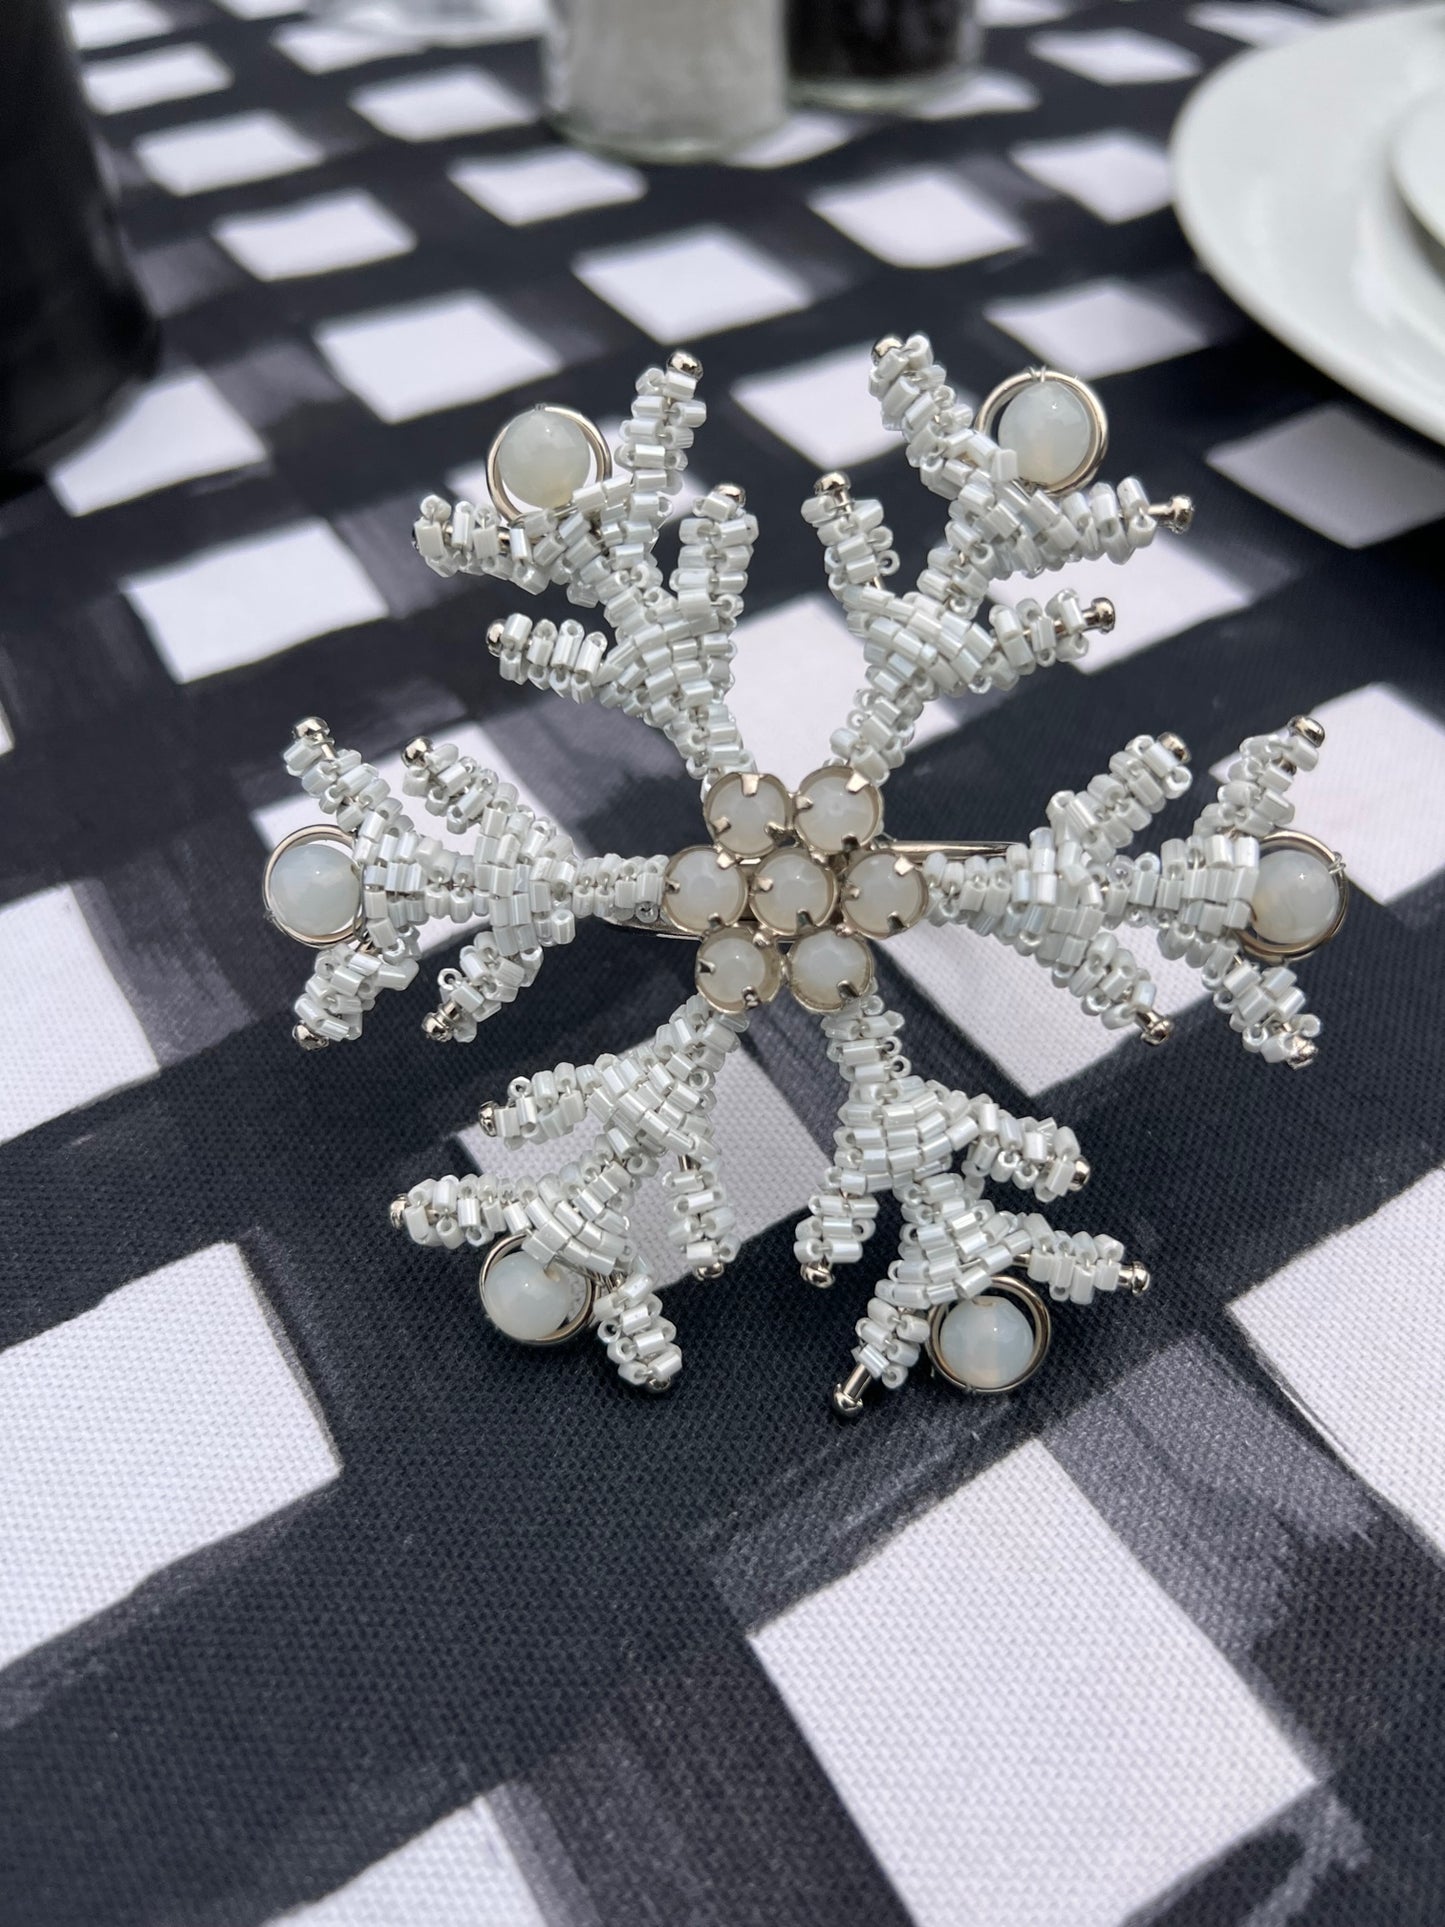 Snowflake Napkin Rings